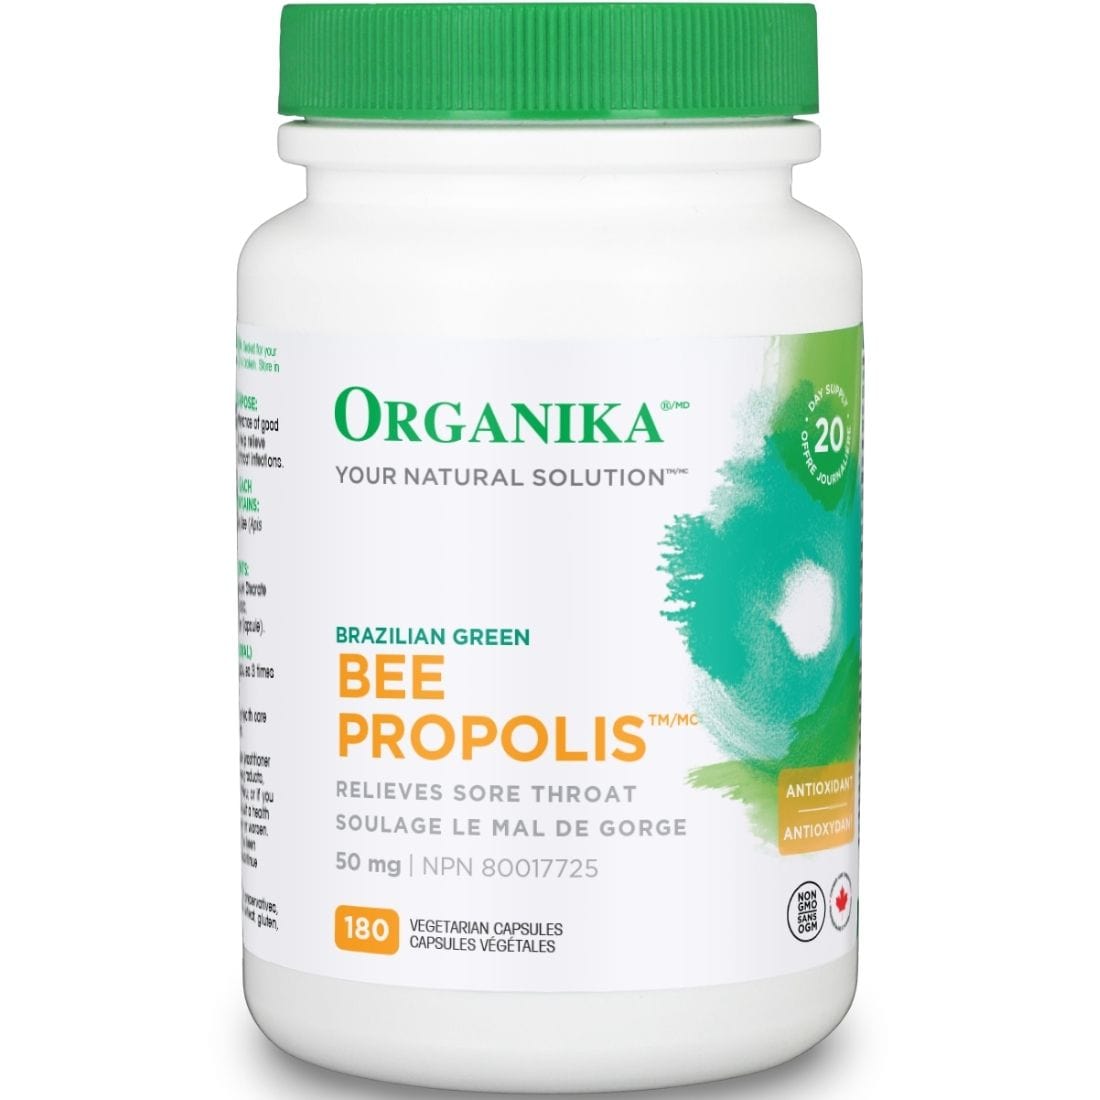 Organika Bee Propolis - Brazilian Green, 50mg, 180 Vegetarian Capsules